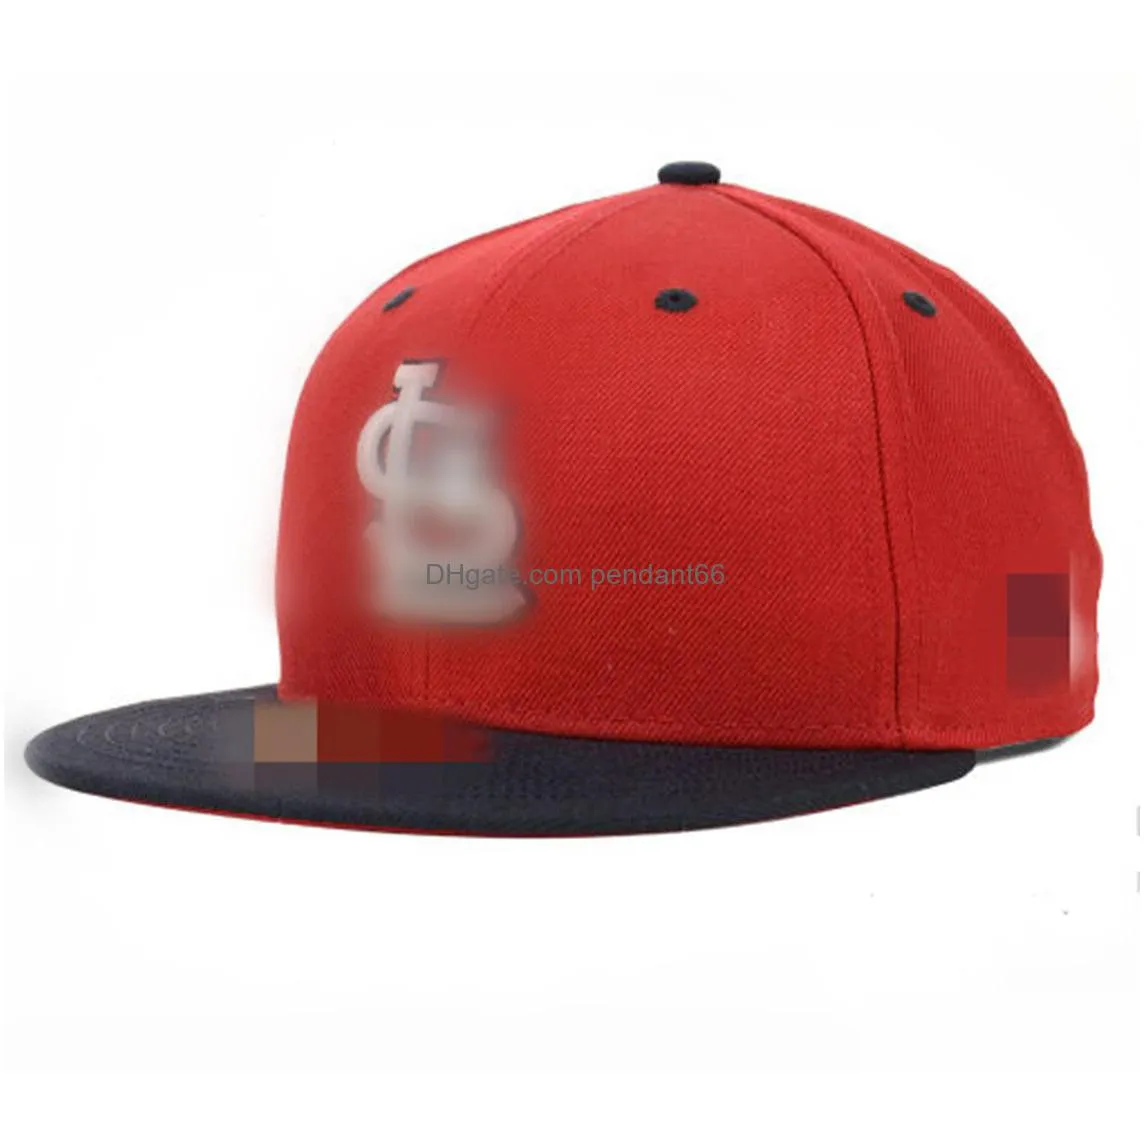  10 styles stl letter baseball caps for men women fashion sports hip hop gorras bone fitted hats h6-7.4